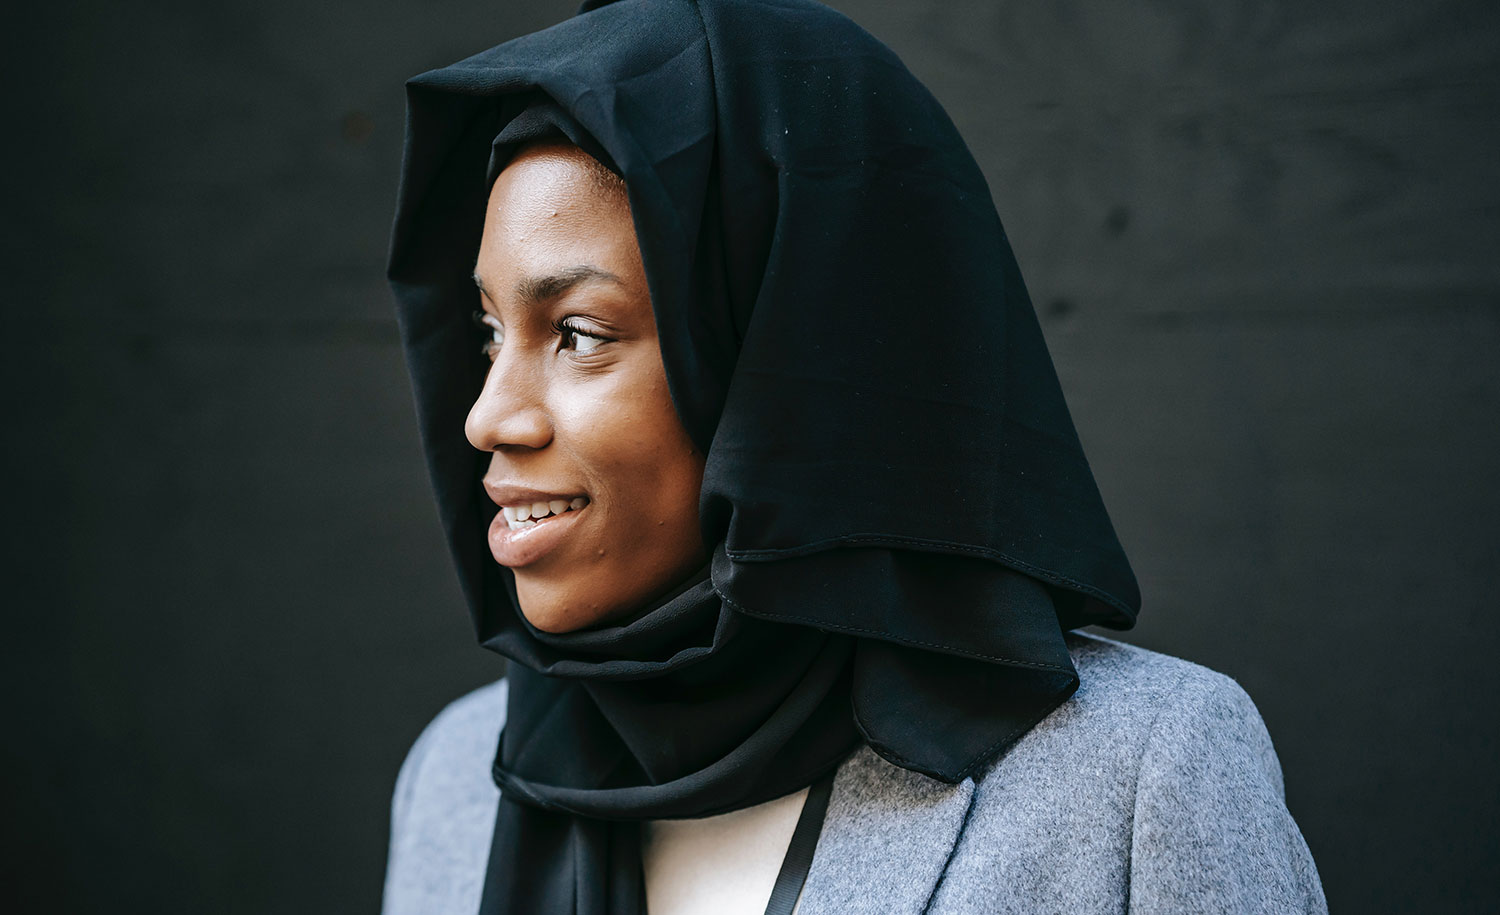 A highly sensitive Black Muslim woman